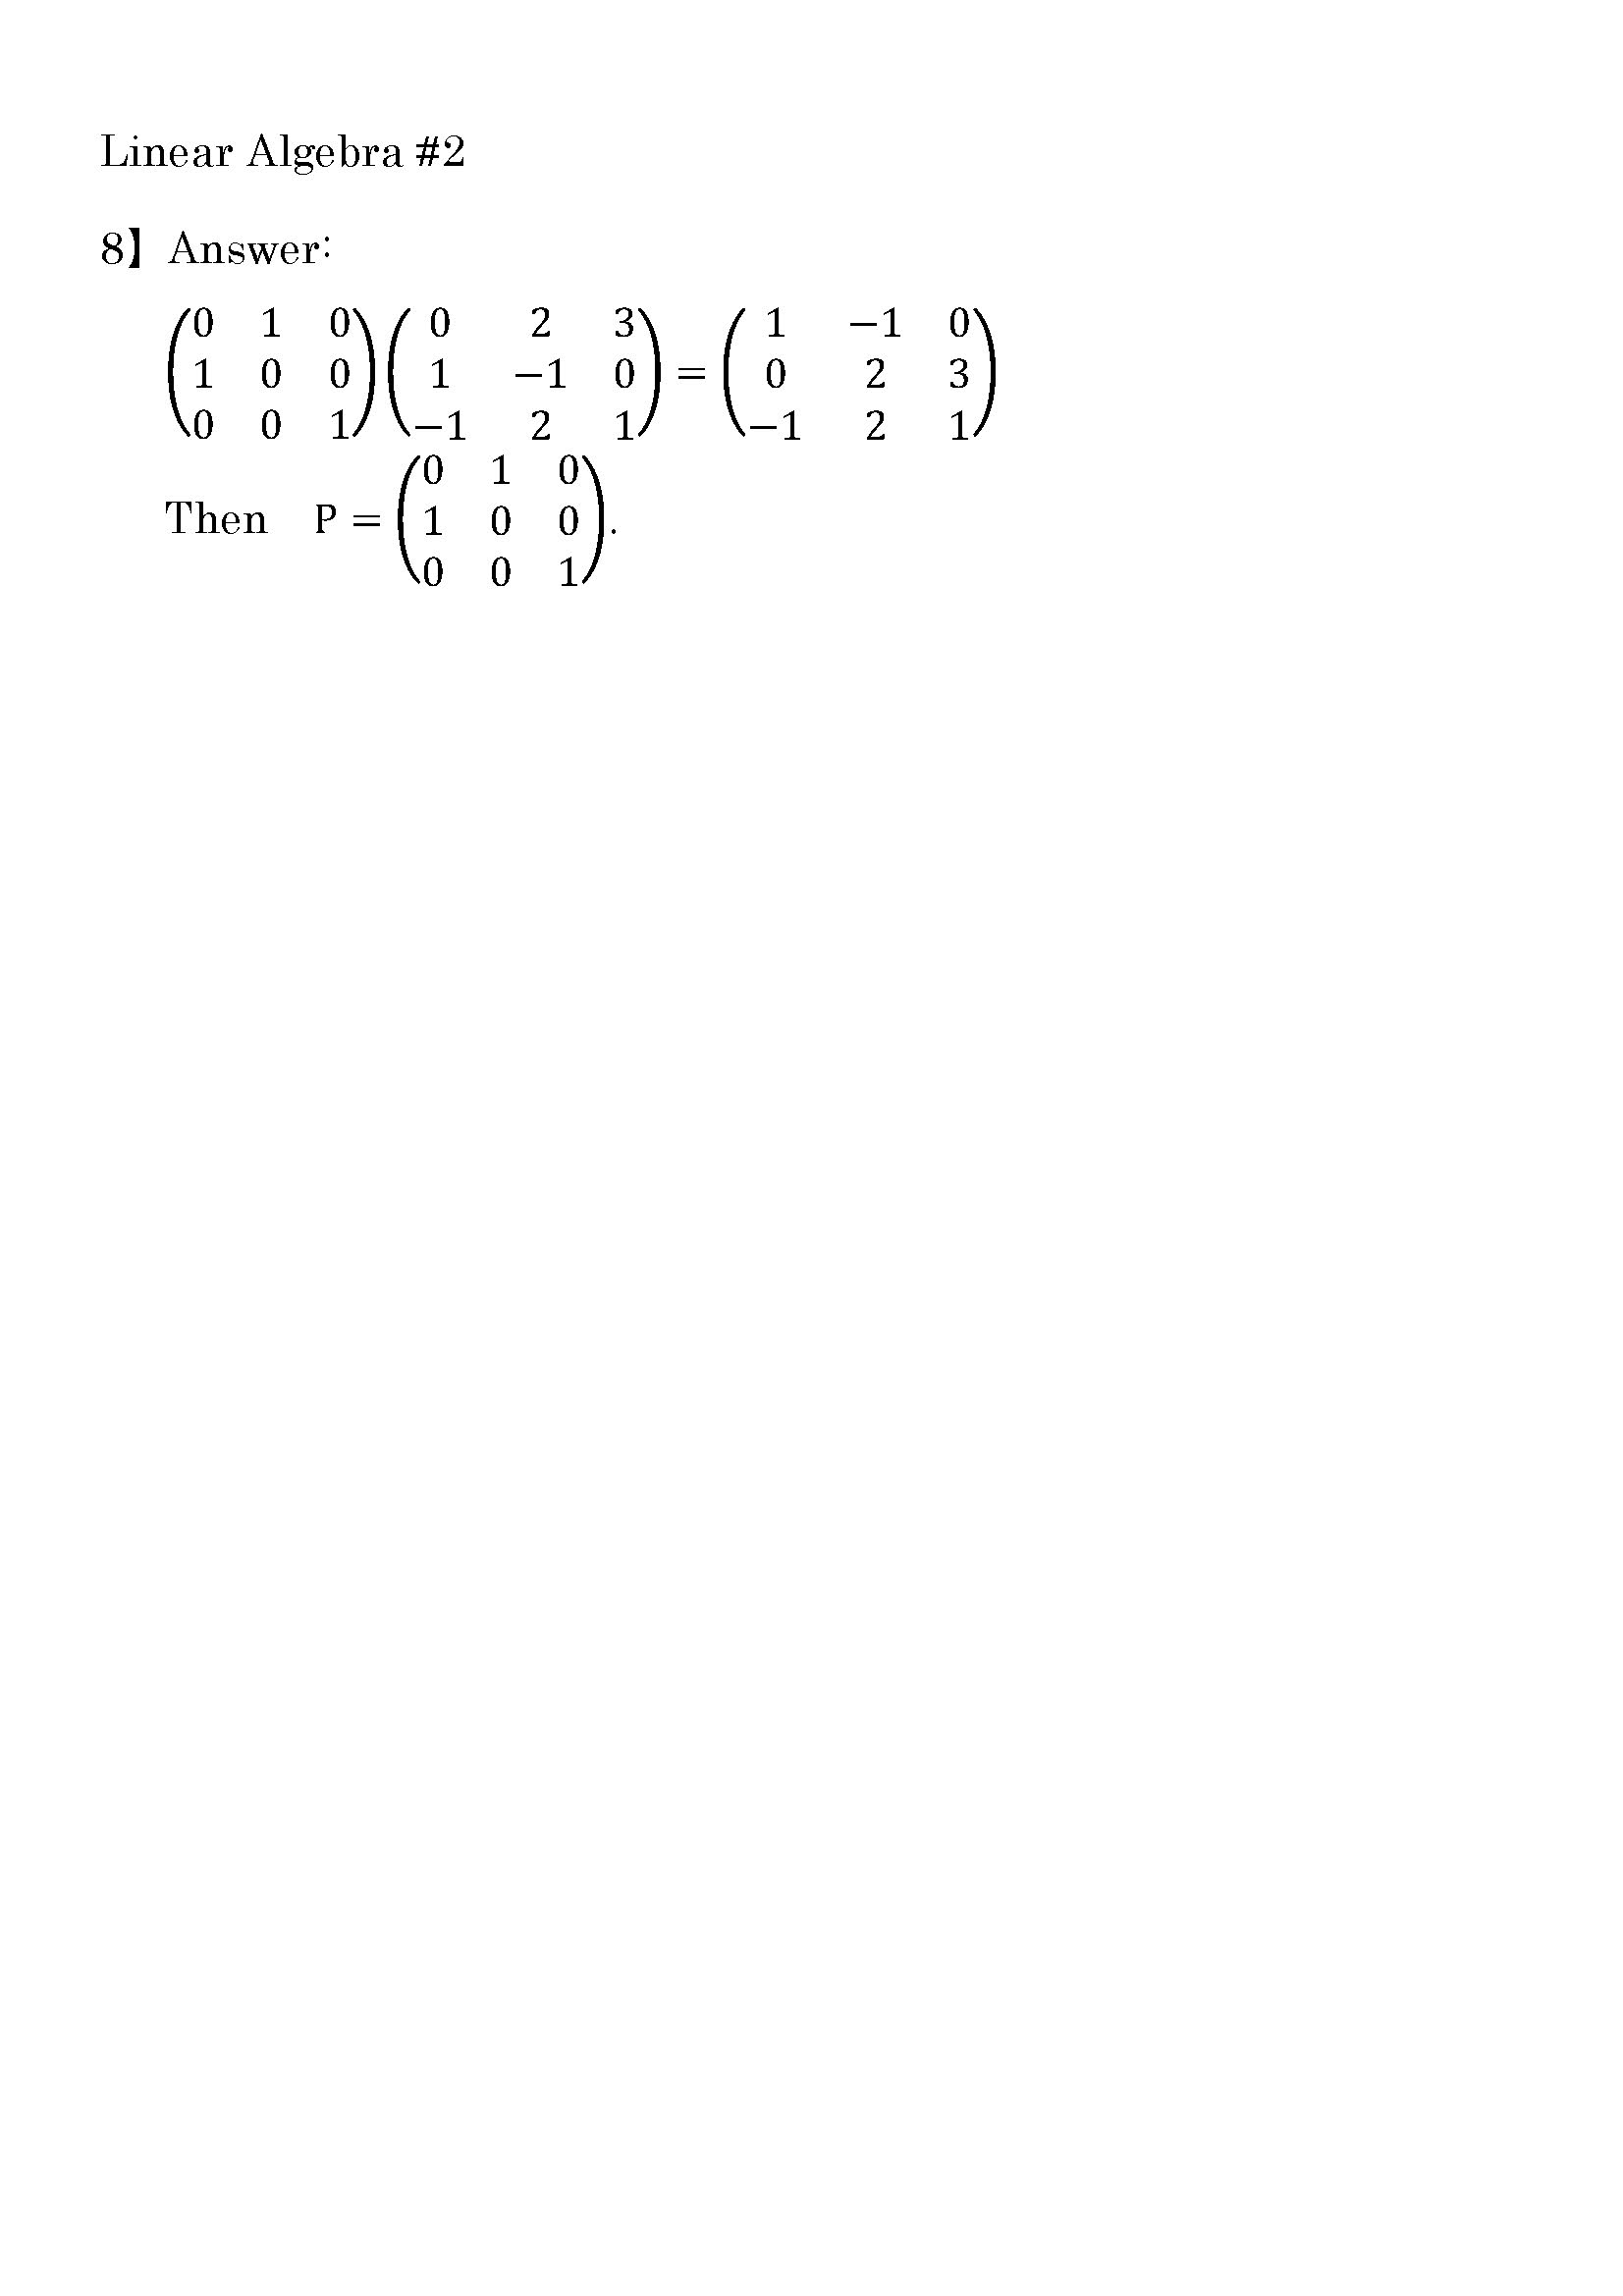 Linear_Algebra_Answer2-tate2_8.jpg